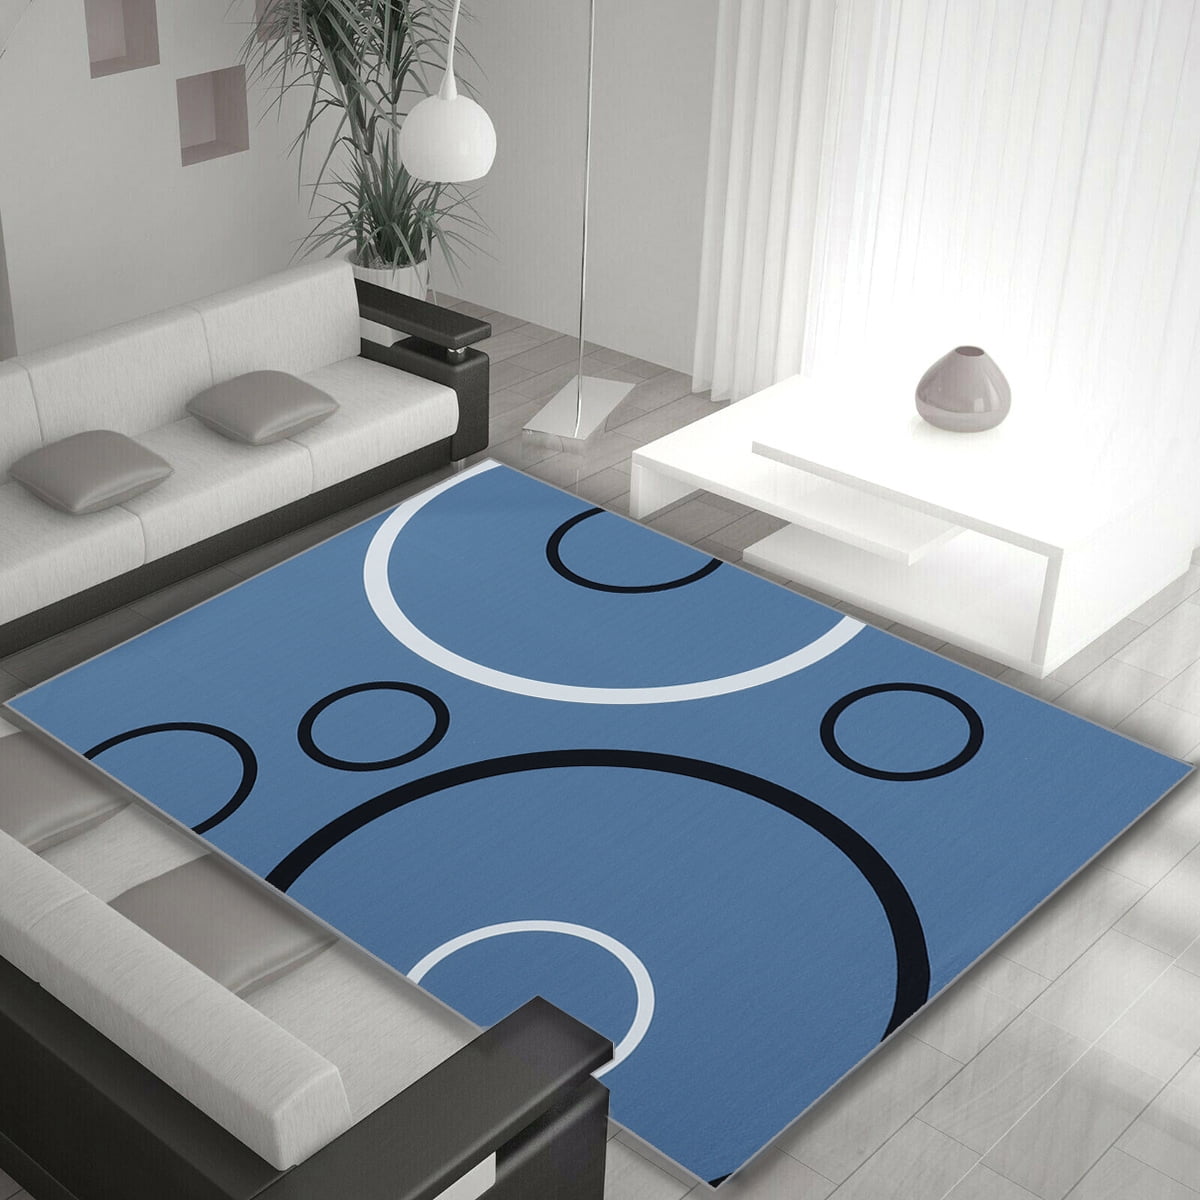 Modern Area Rugs Large Small Carpets Runner Floor Mats for Living Room Bedroom 